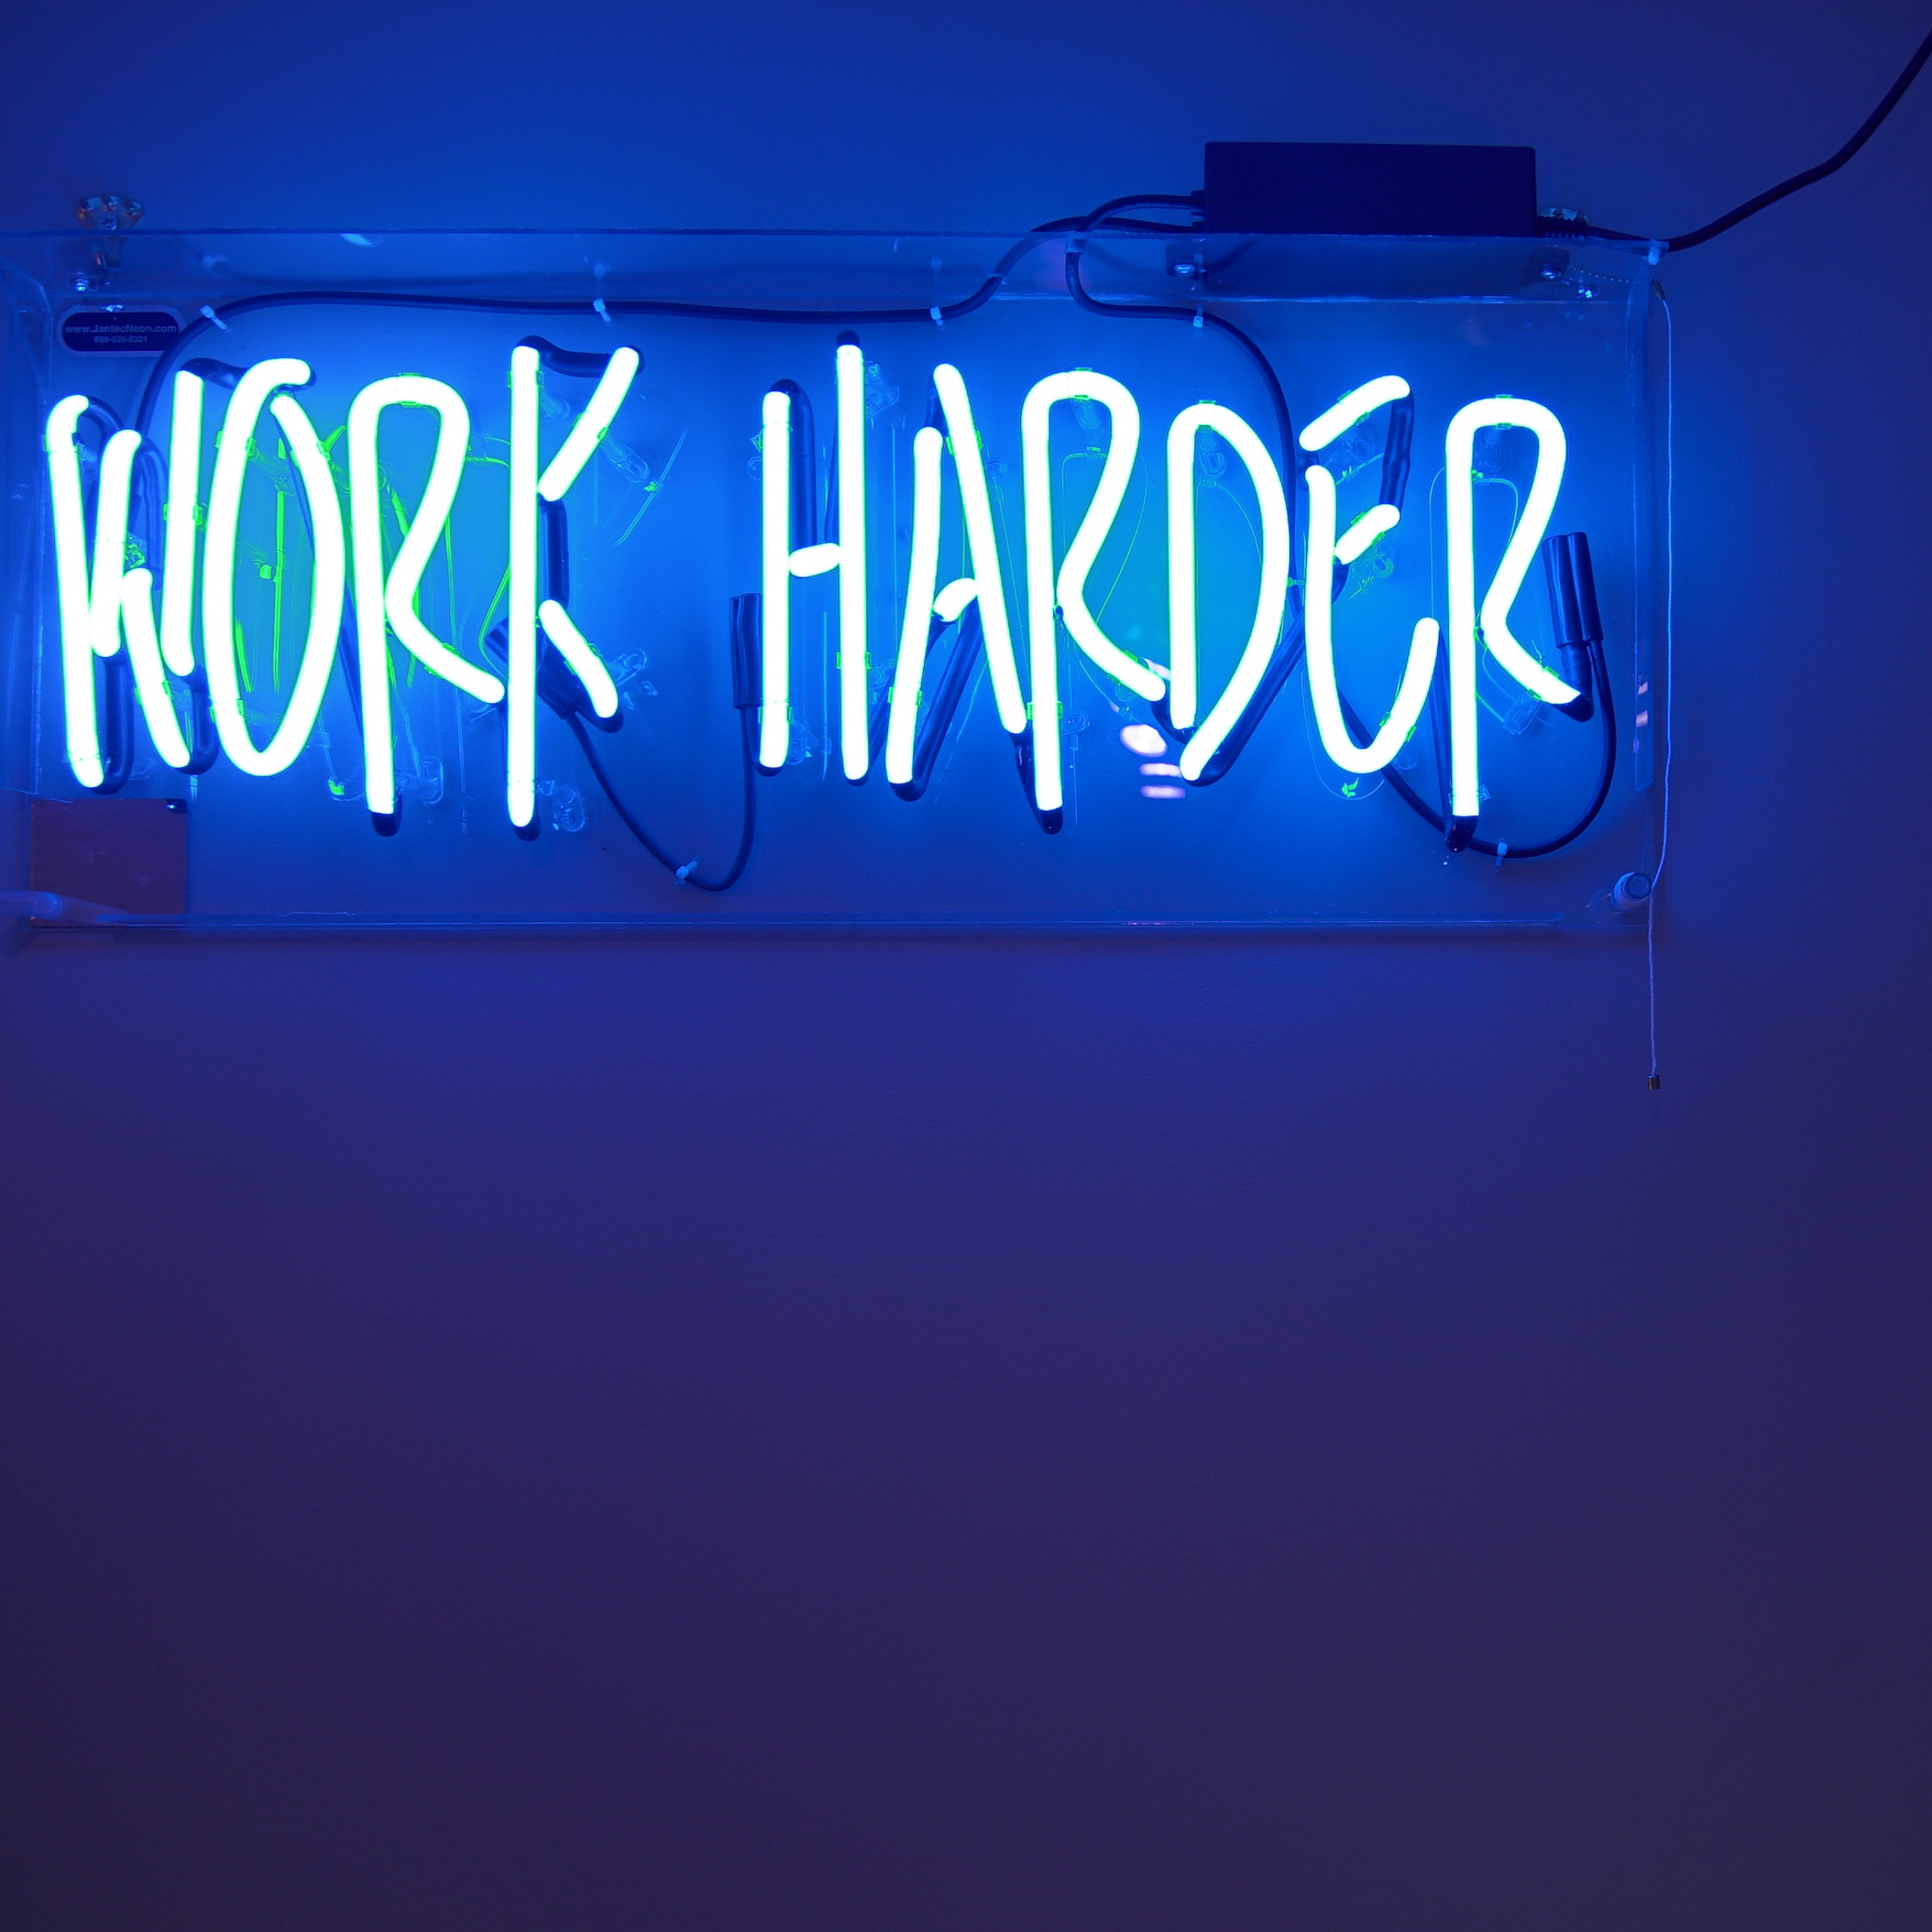 Work harder Wallpaper 4K Neon Lights Blue background 